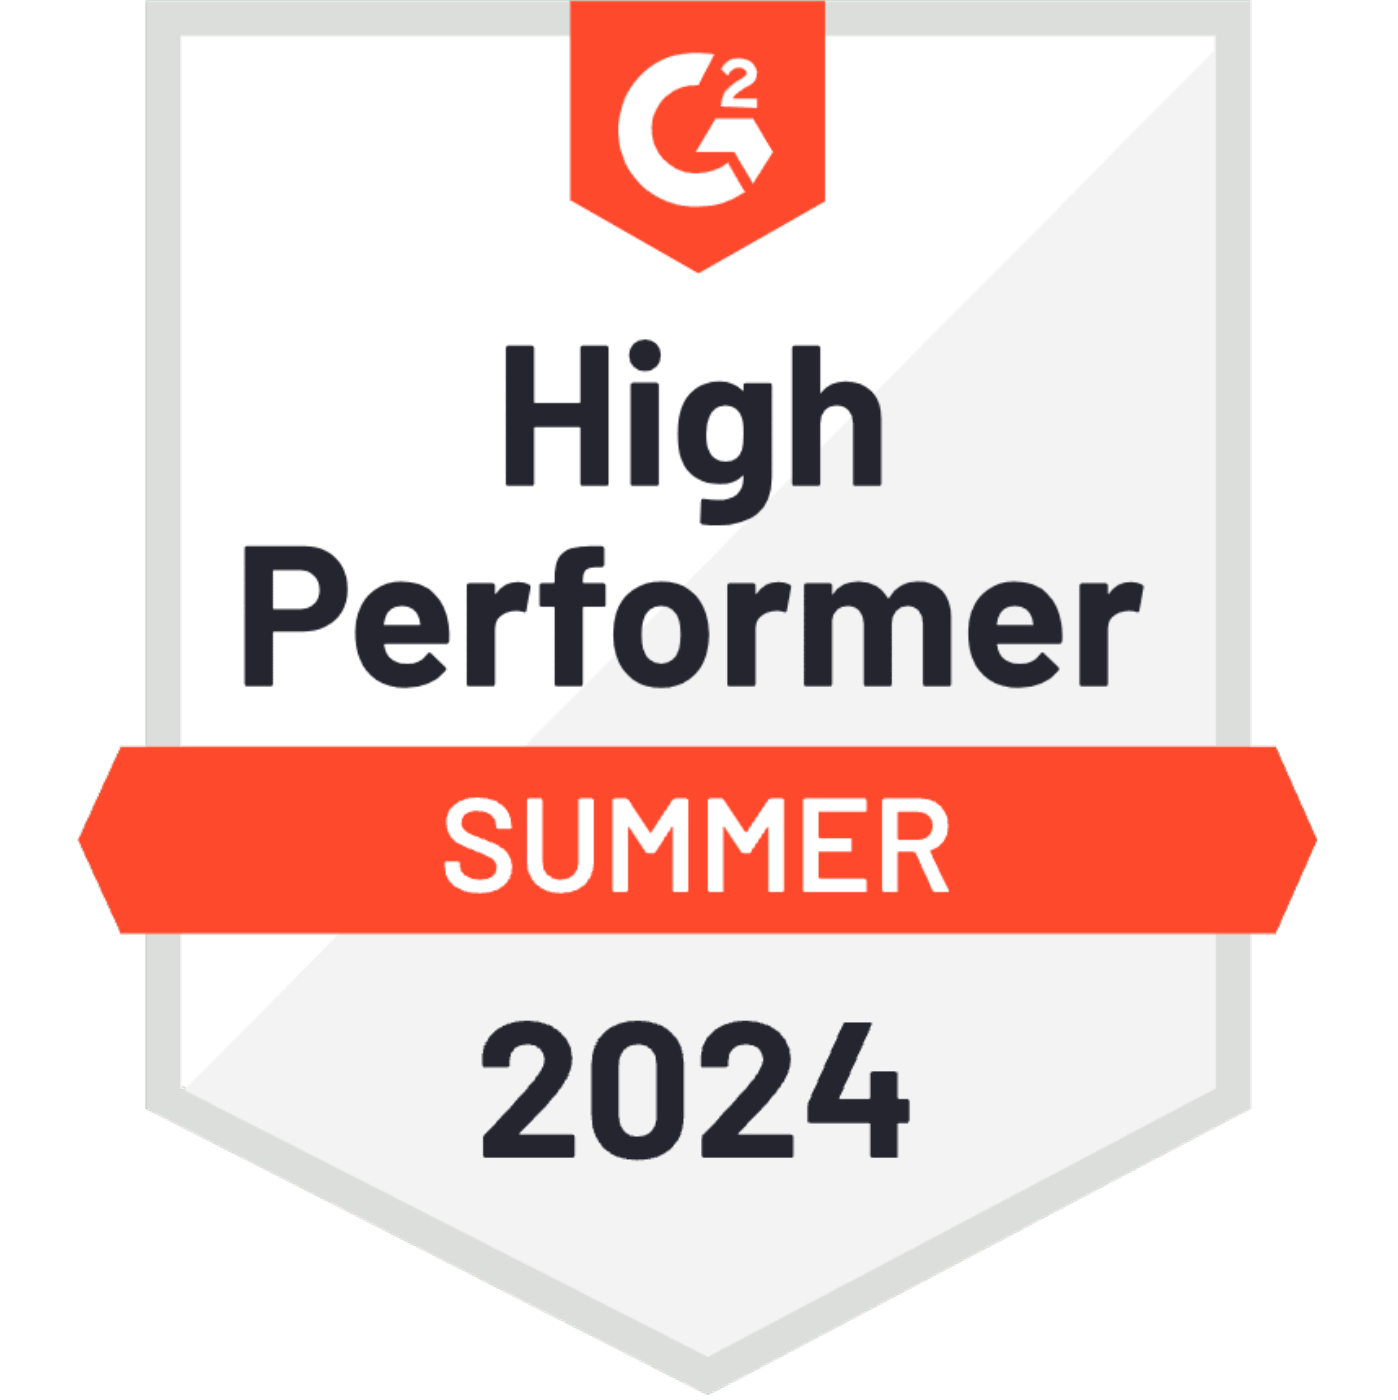 G2 High Performer Summer 2024